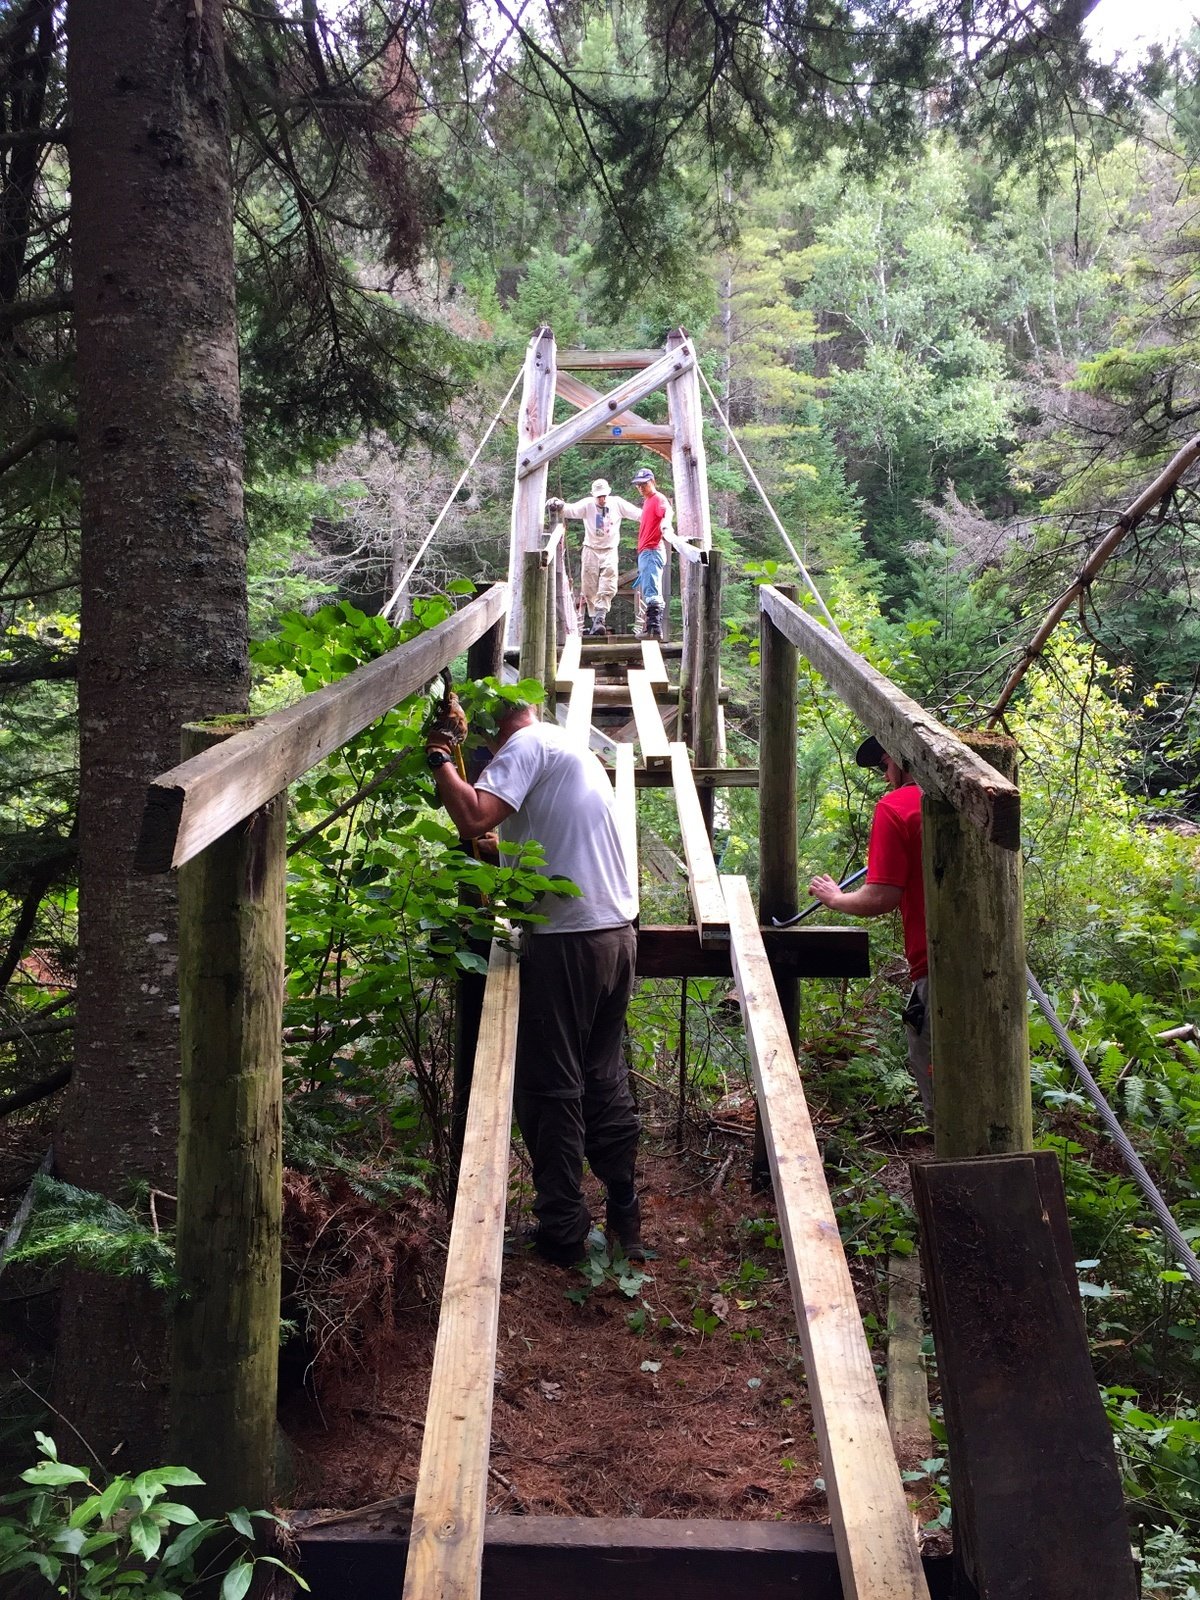 NOLS alumni work together to build a bridge in the Adirondacks